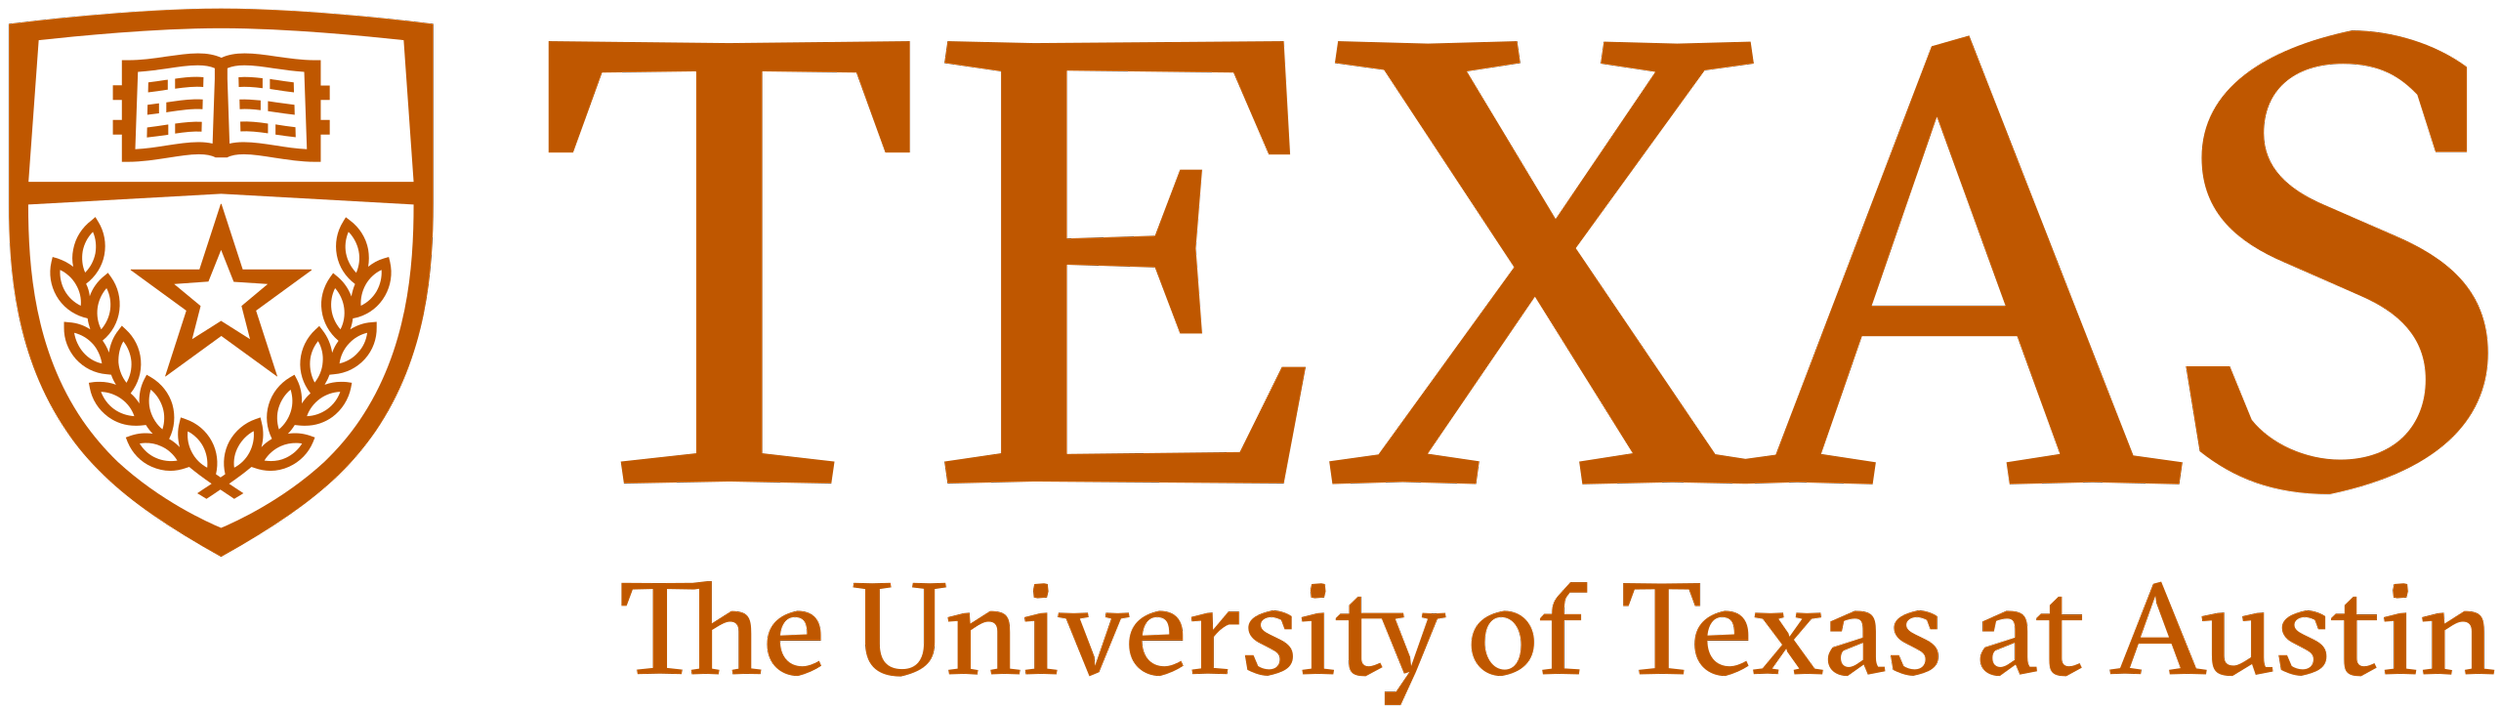 University_of_Texas_at_Austin_logo.svg.png